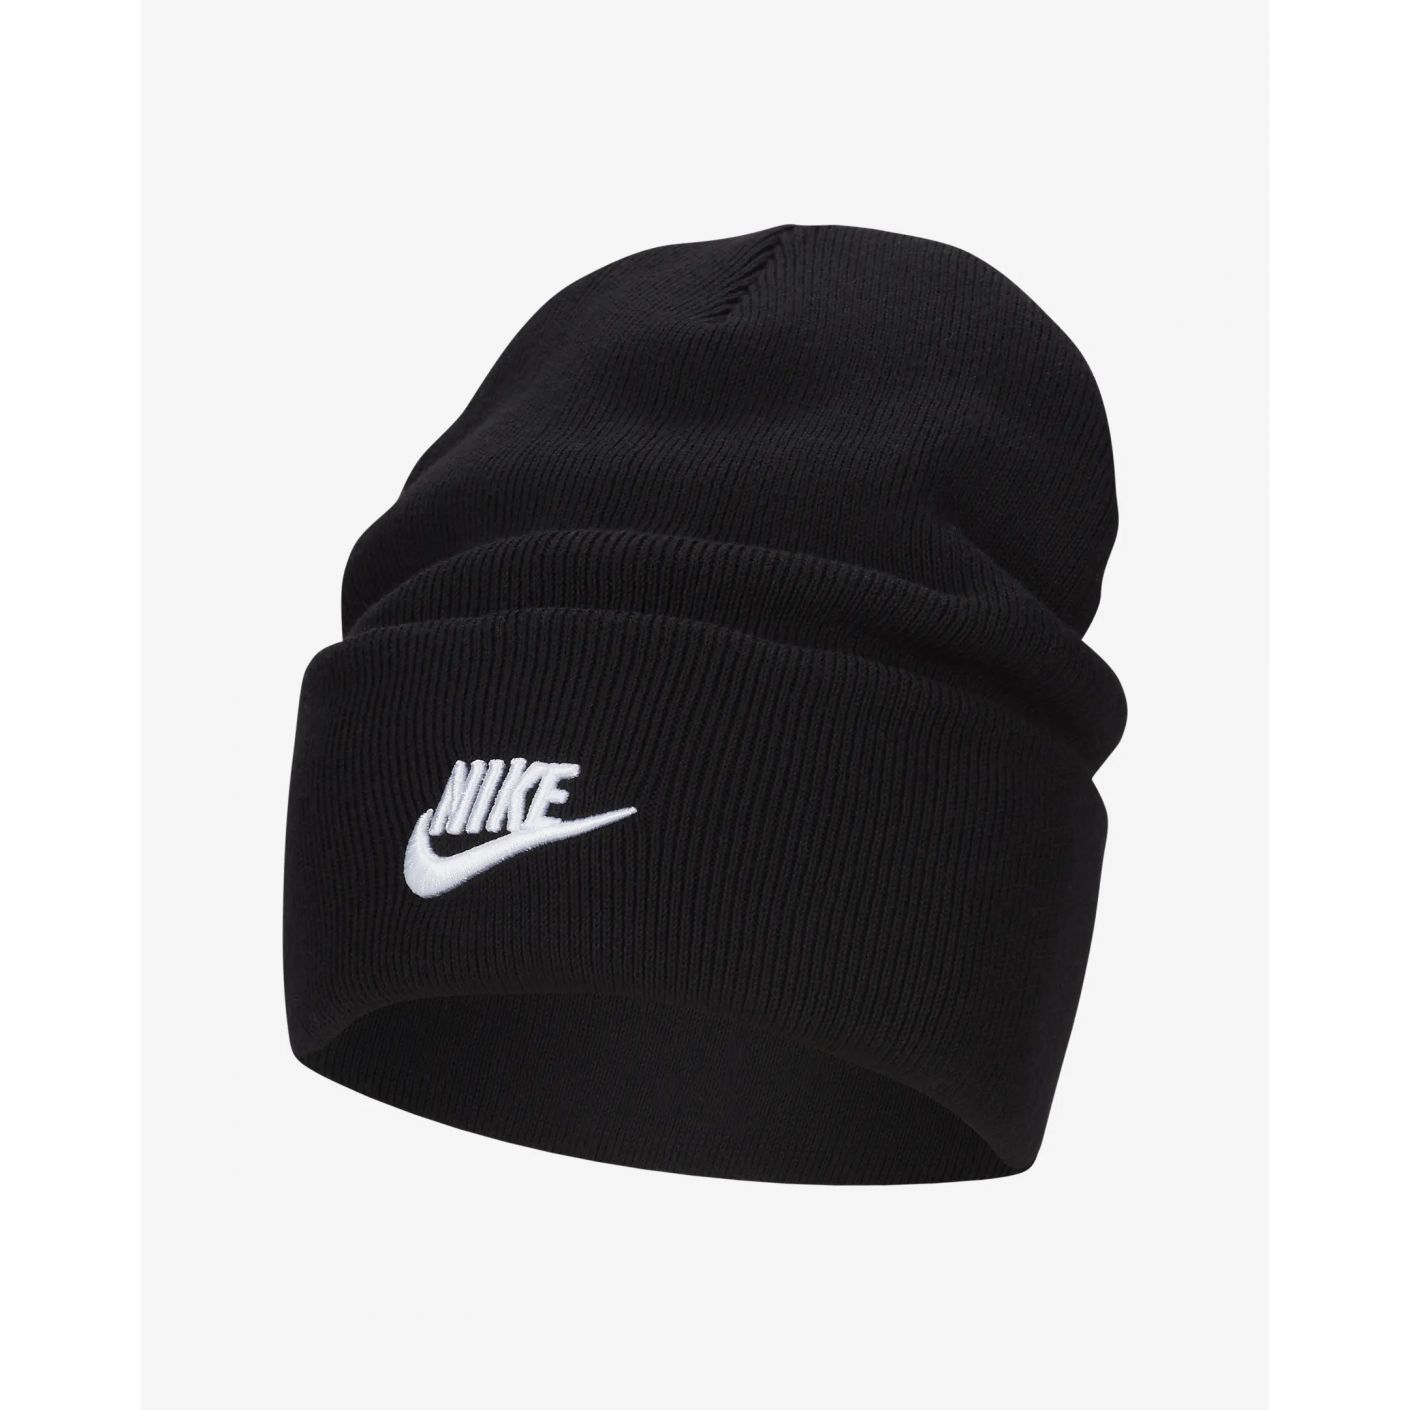 Nike Futura Peak Cap Black